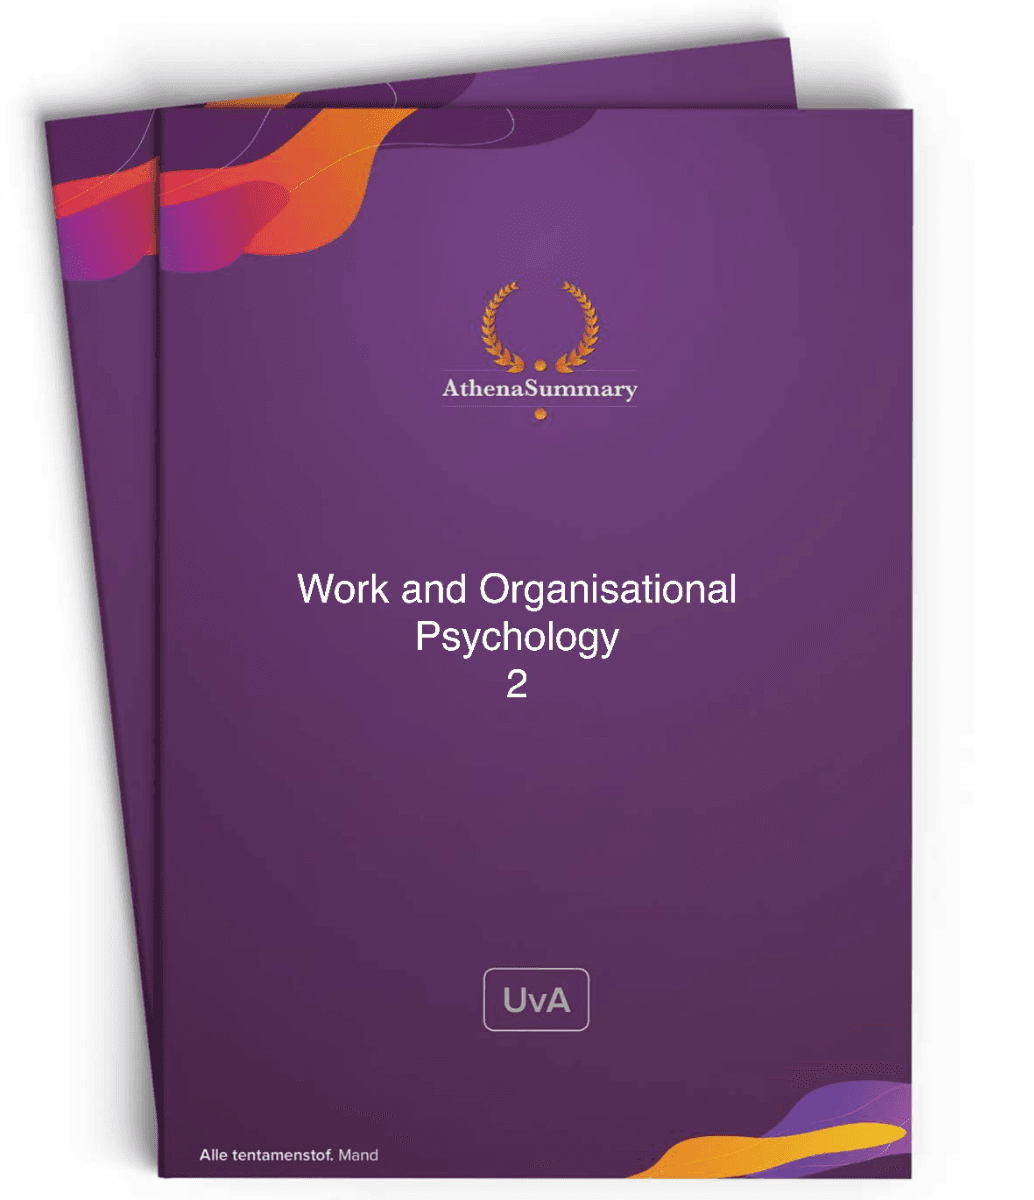 Literature Summary: Work and Organisational Psychology - 2